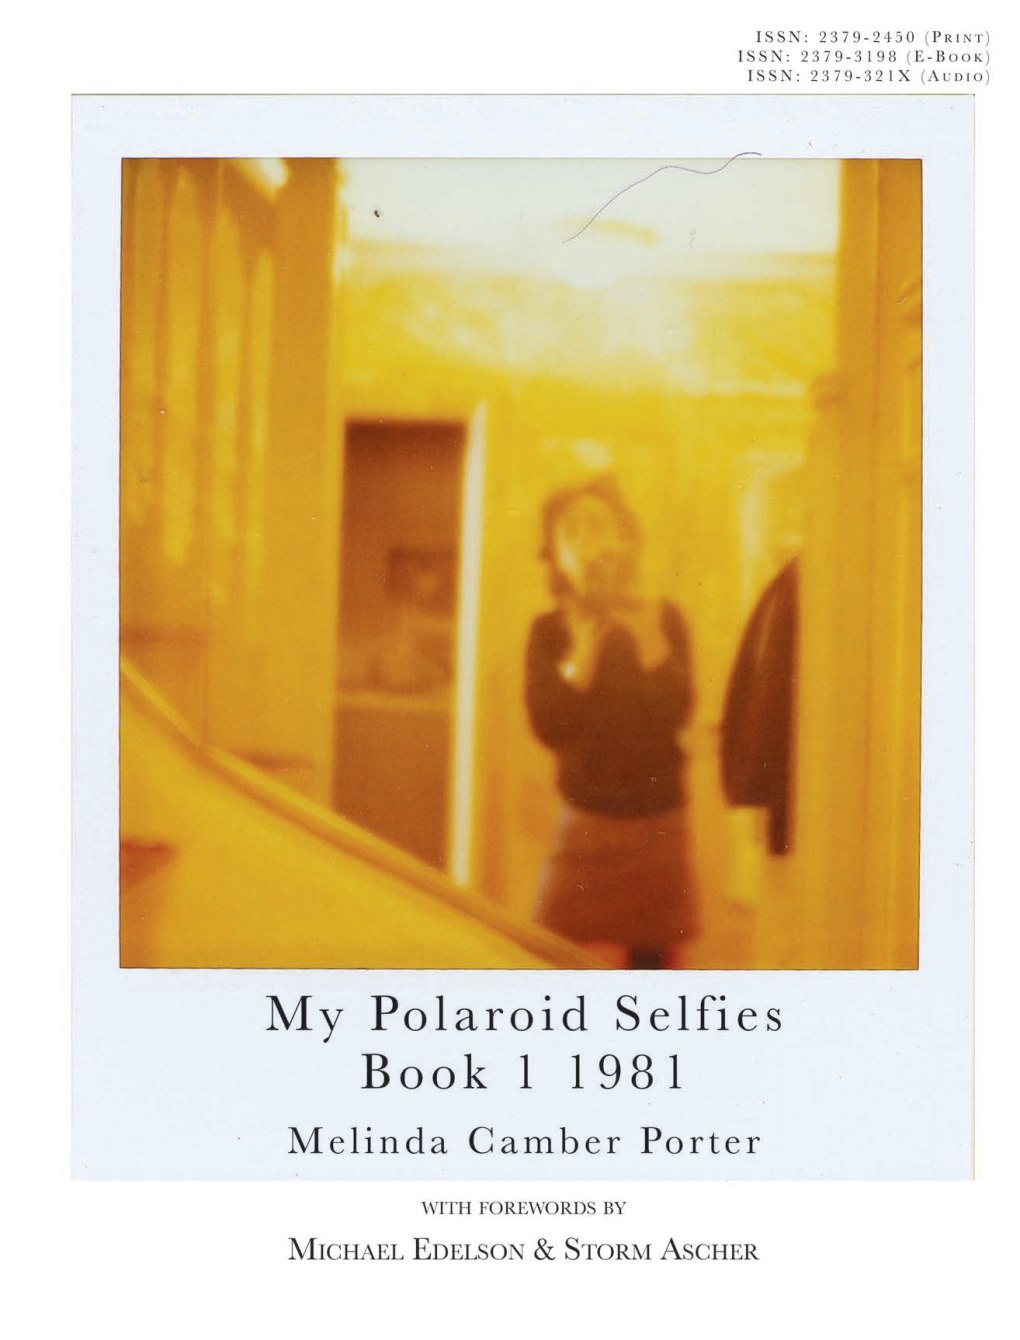 MY POLAROID SELFIES BOOK I 1981Copy